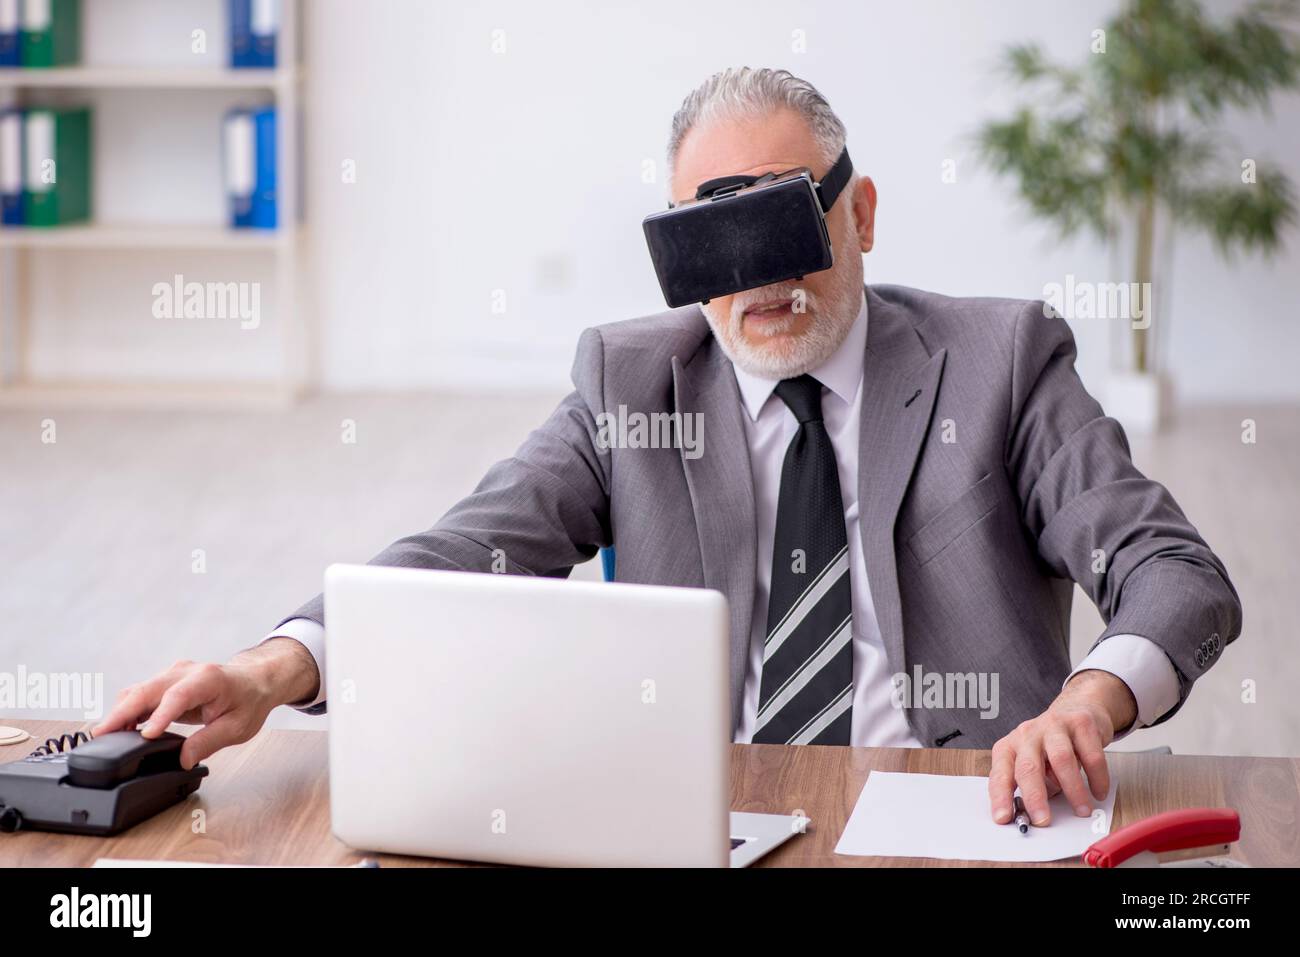 Old employee enjoying virtual glasses at workplace Stock Photo